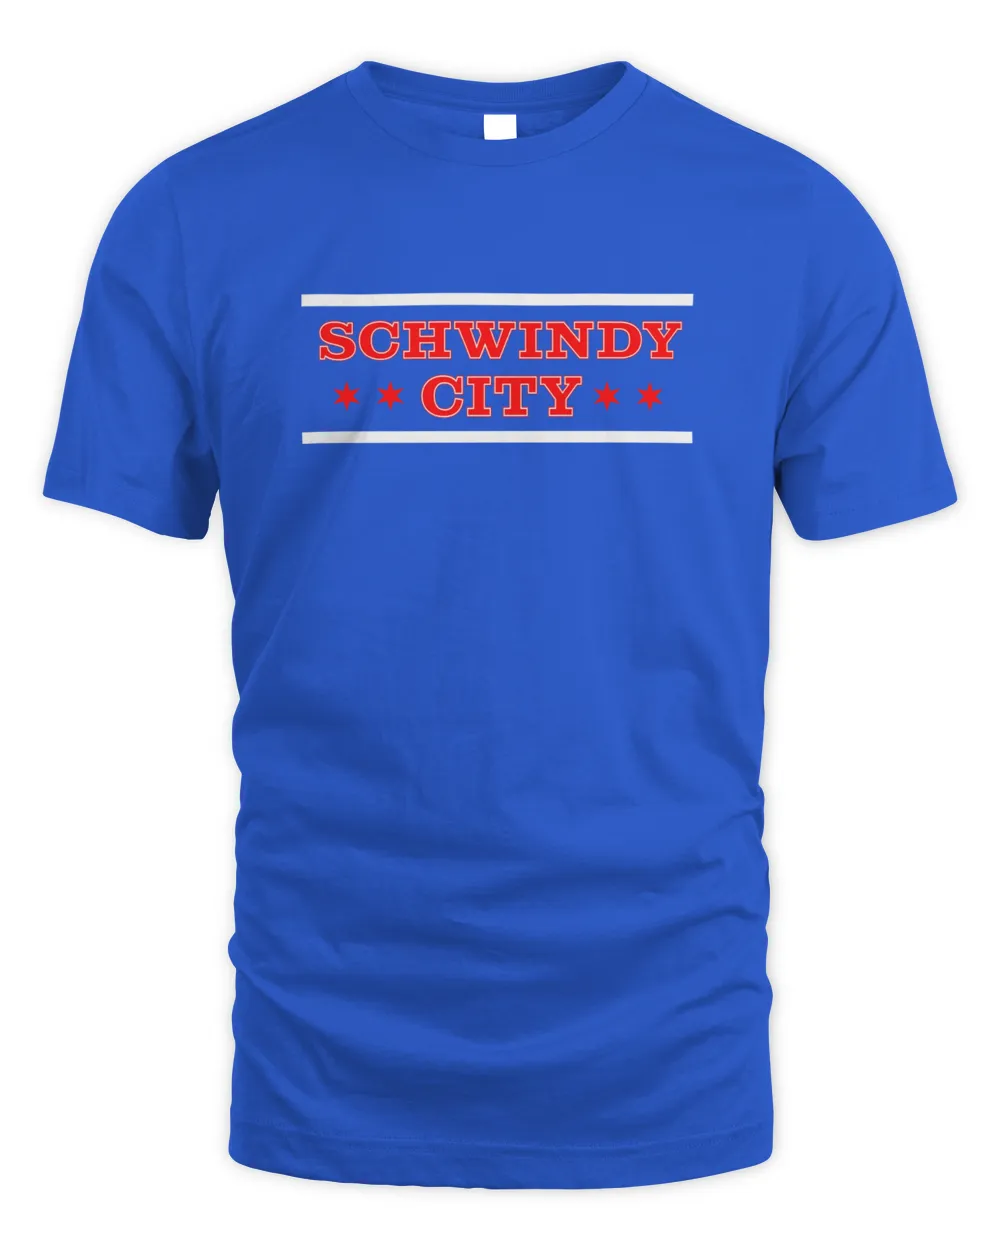 Obviousshirts Schwindy City Shirt